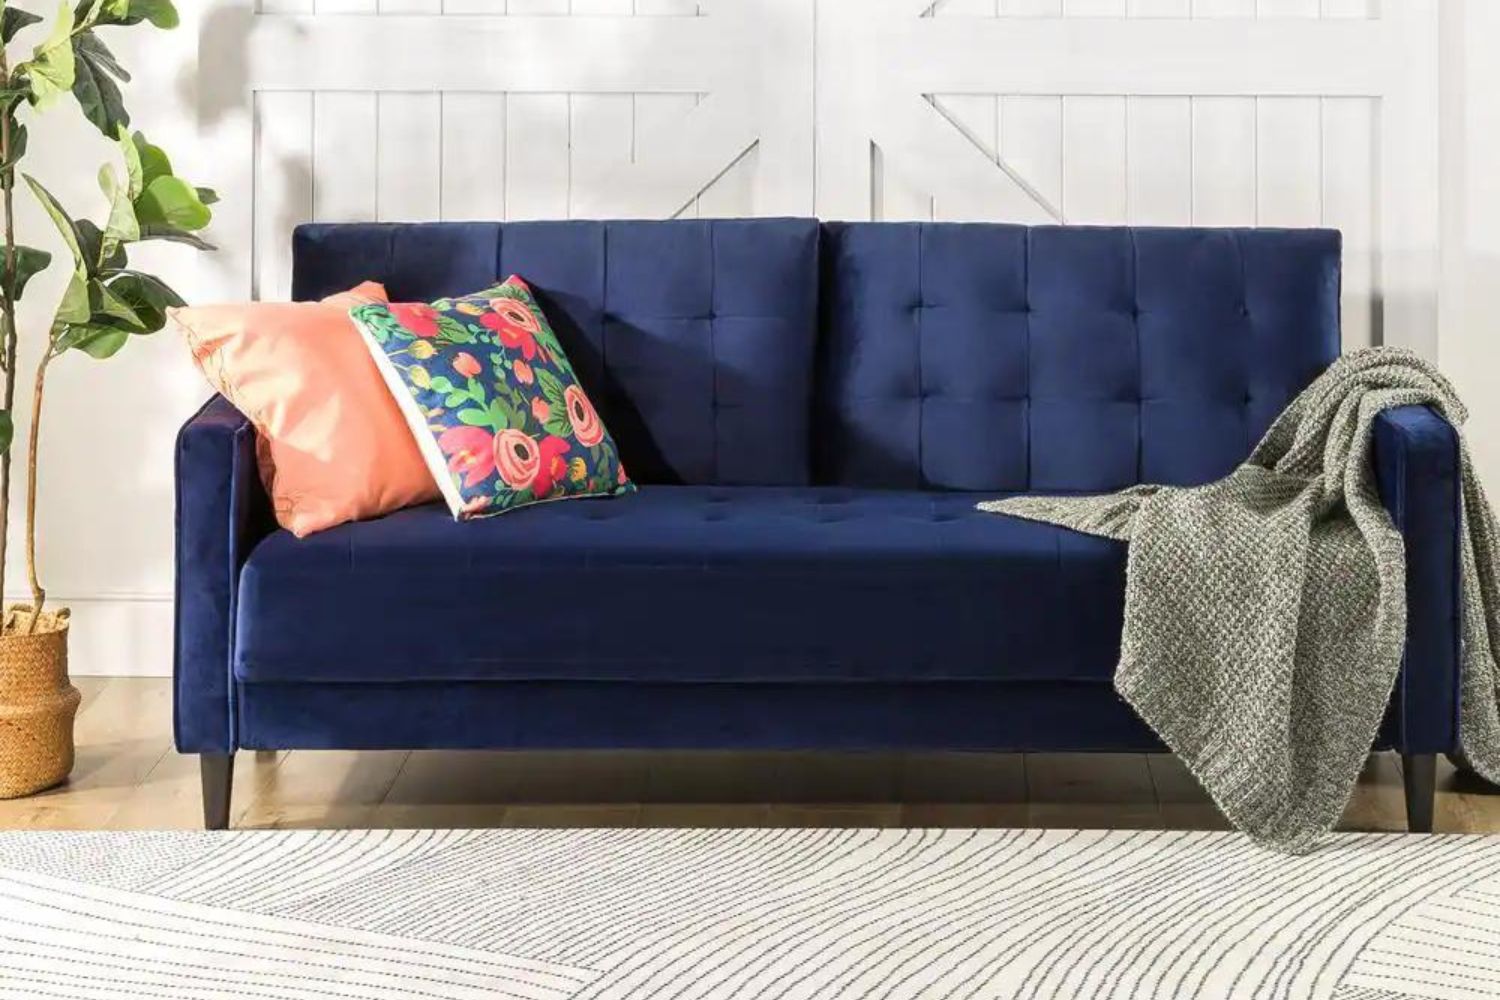 Sofas Under $500 Options: Zinus Benton Navy Velvet Upholstered Sofa